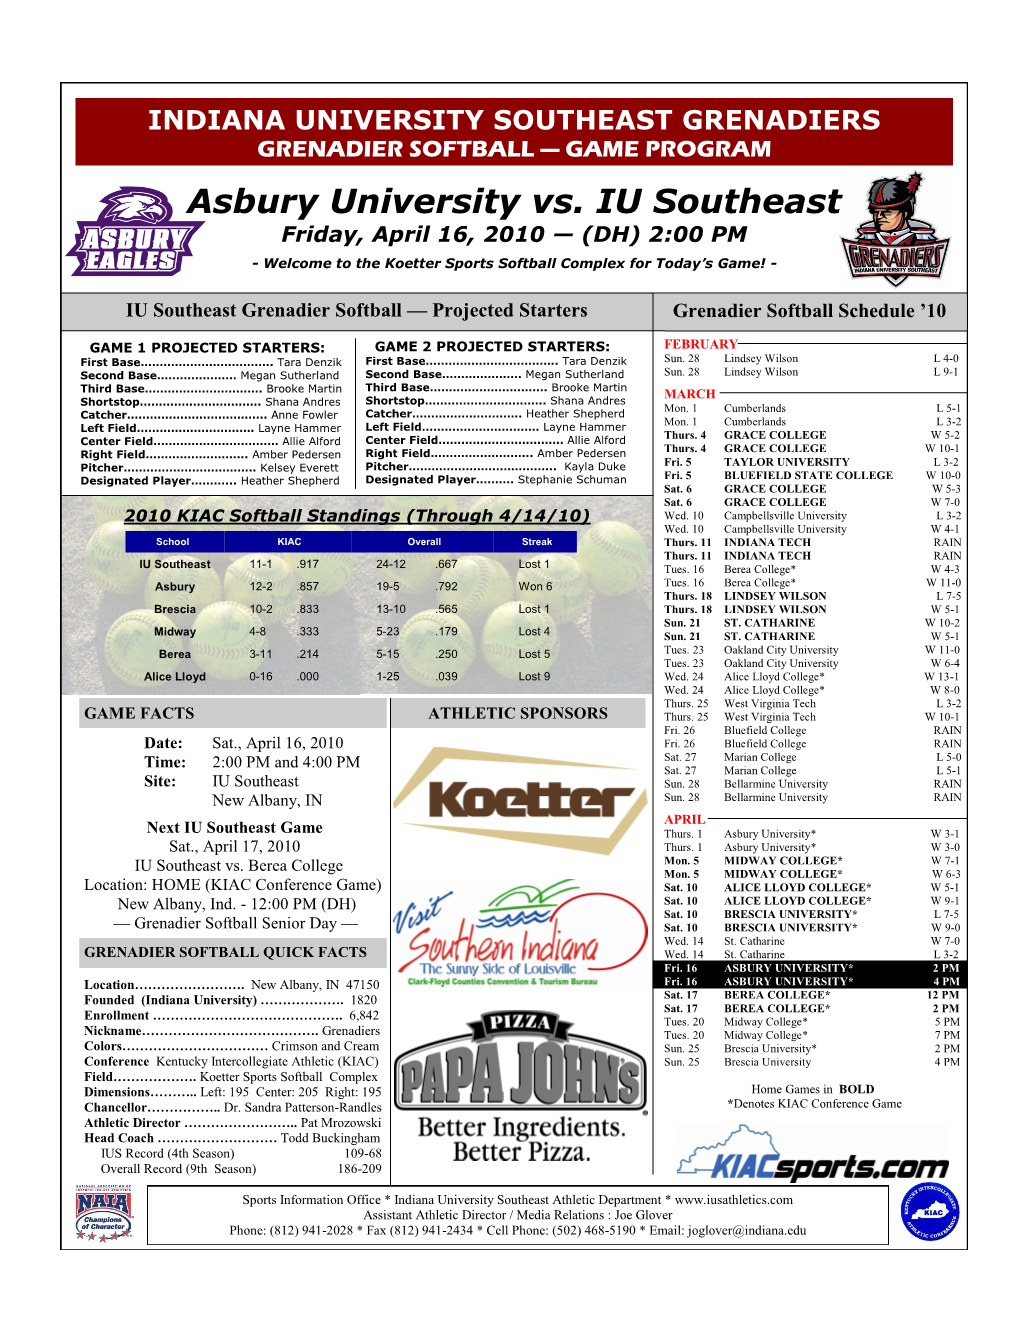 Asbury University Vs. IU Southeast Friday, April 16, 2010 — (DH) 2:00 PM